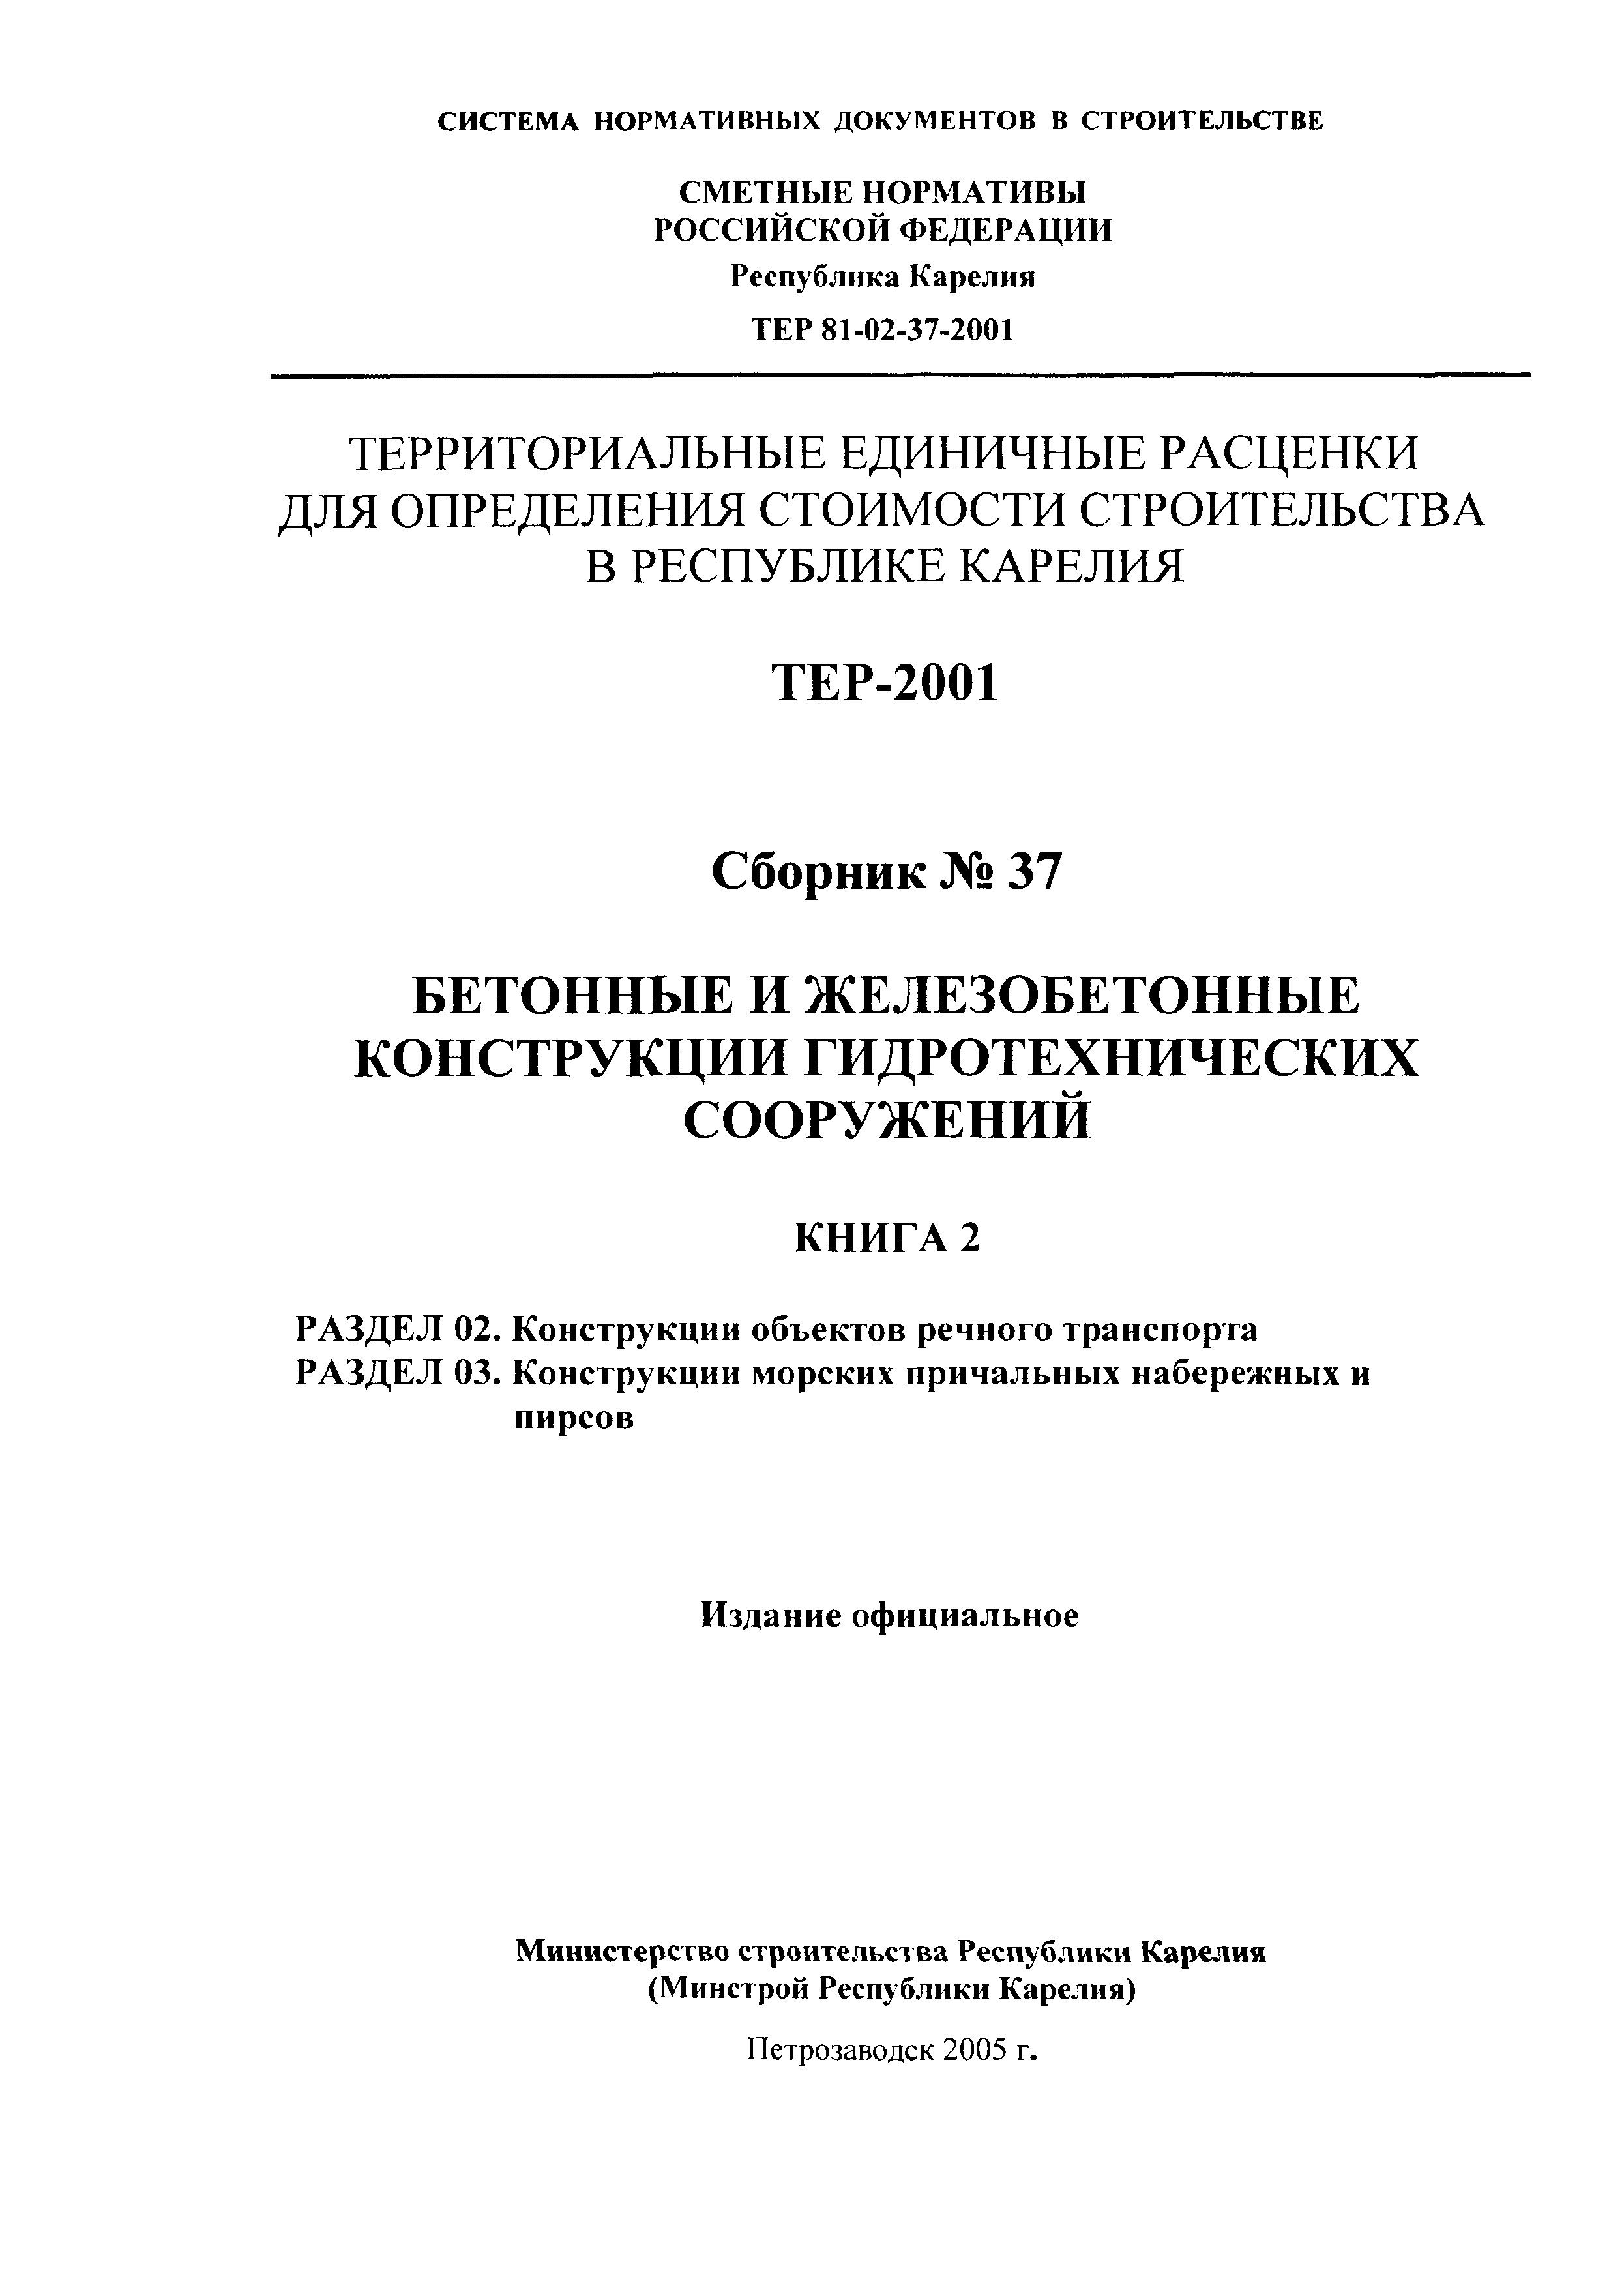 ТЕР Республика Карелия 2001-37